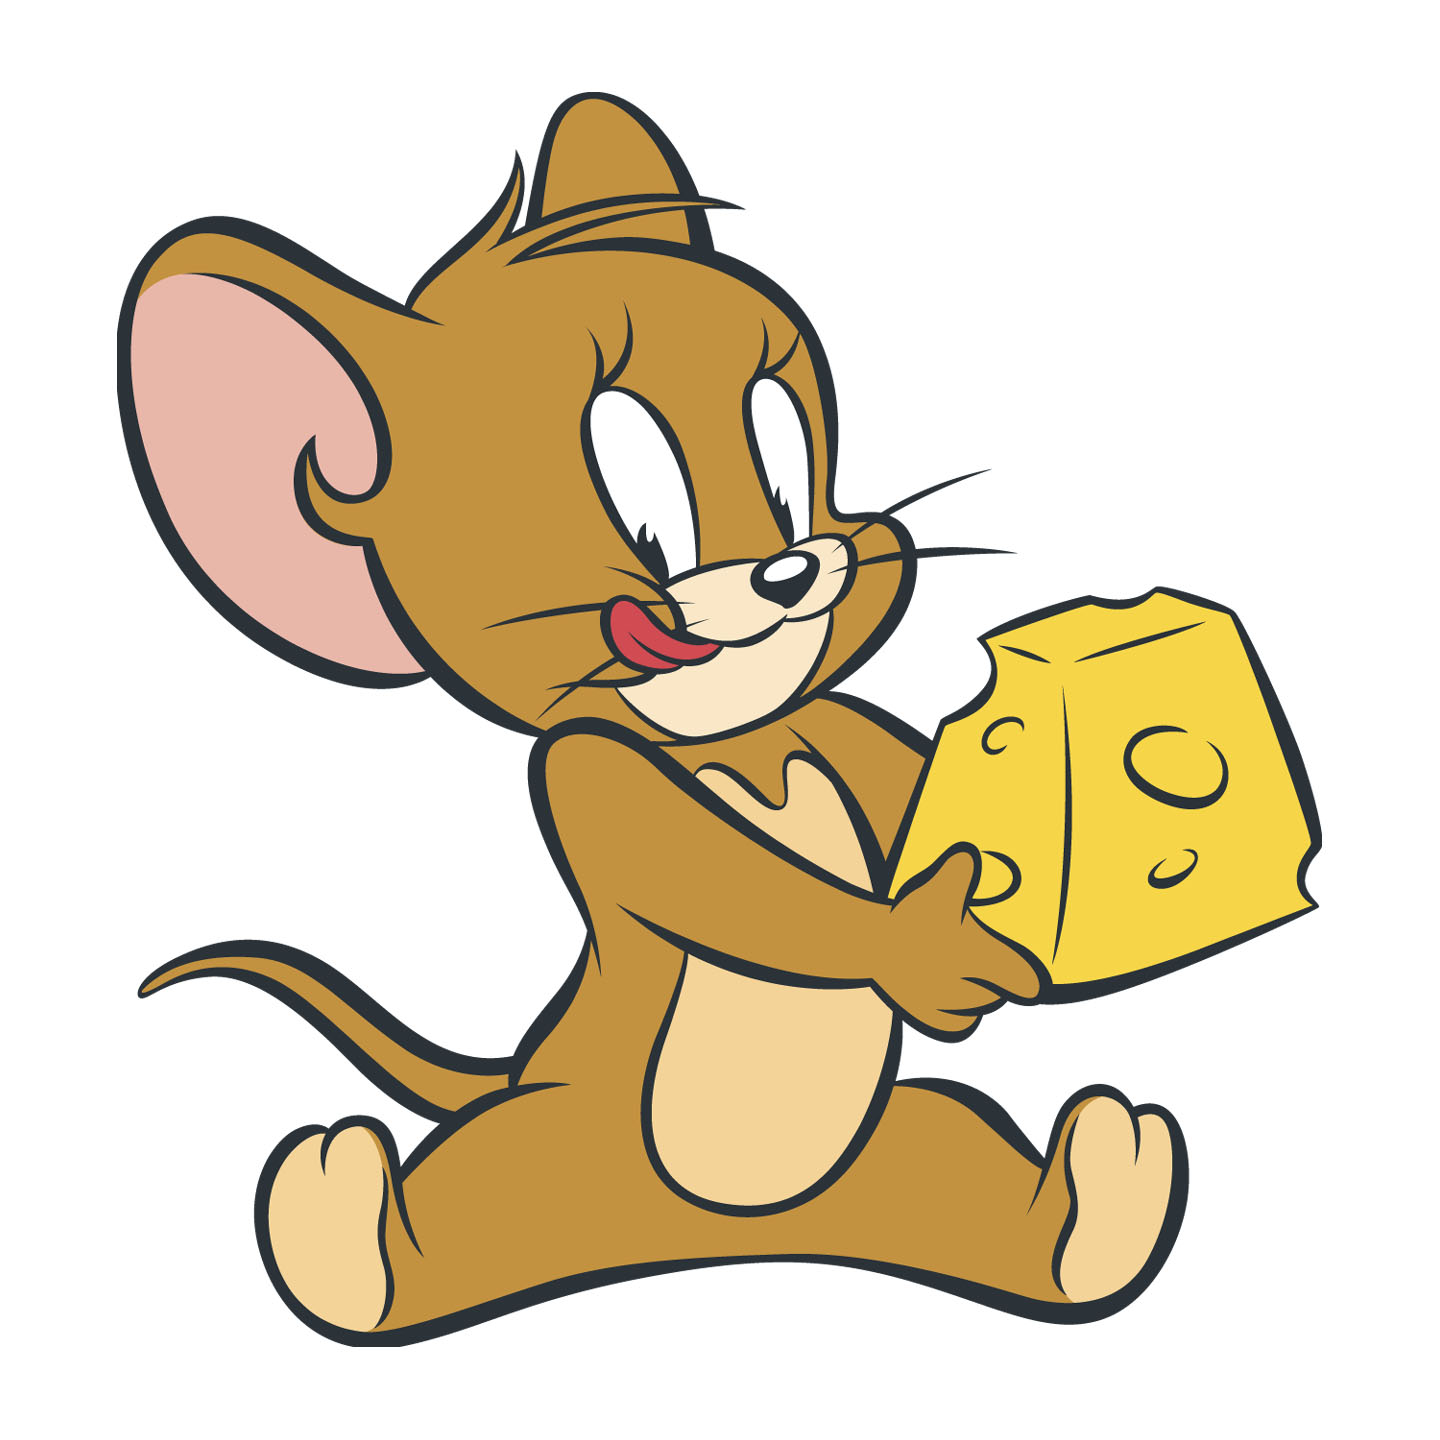 Jerry Mouse | Cartoon characters Wiki | FANDOM powered by Wikia